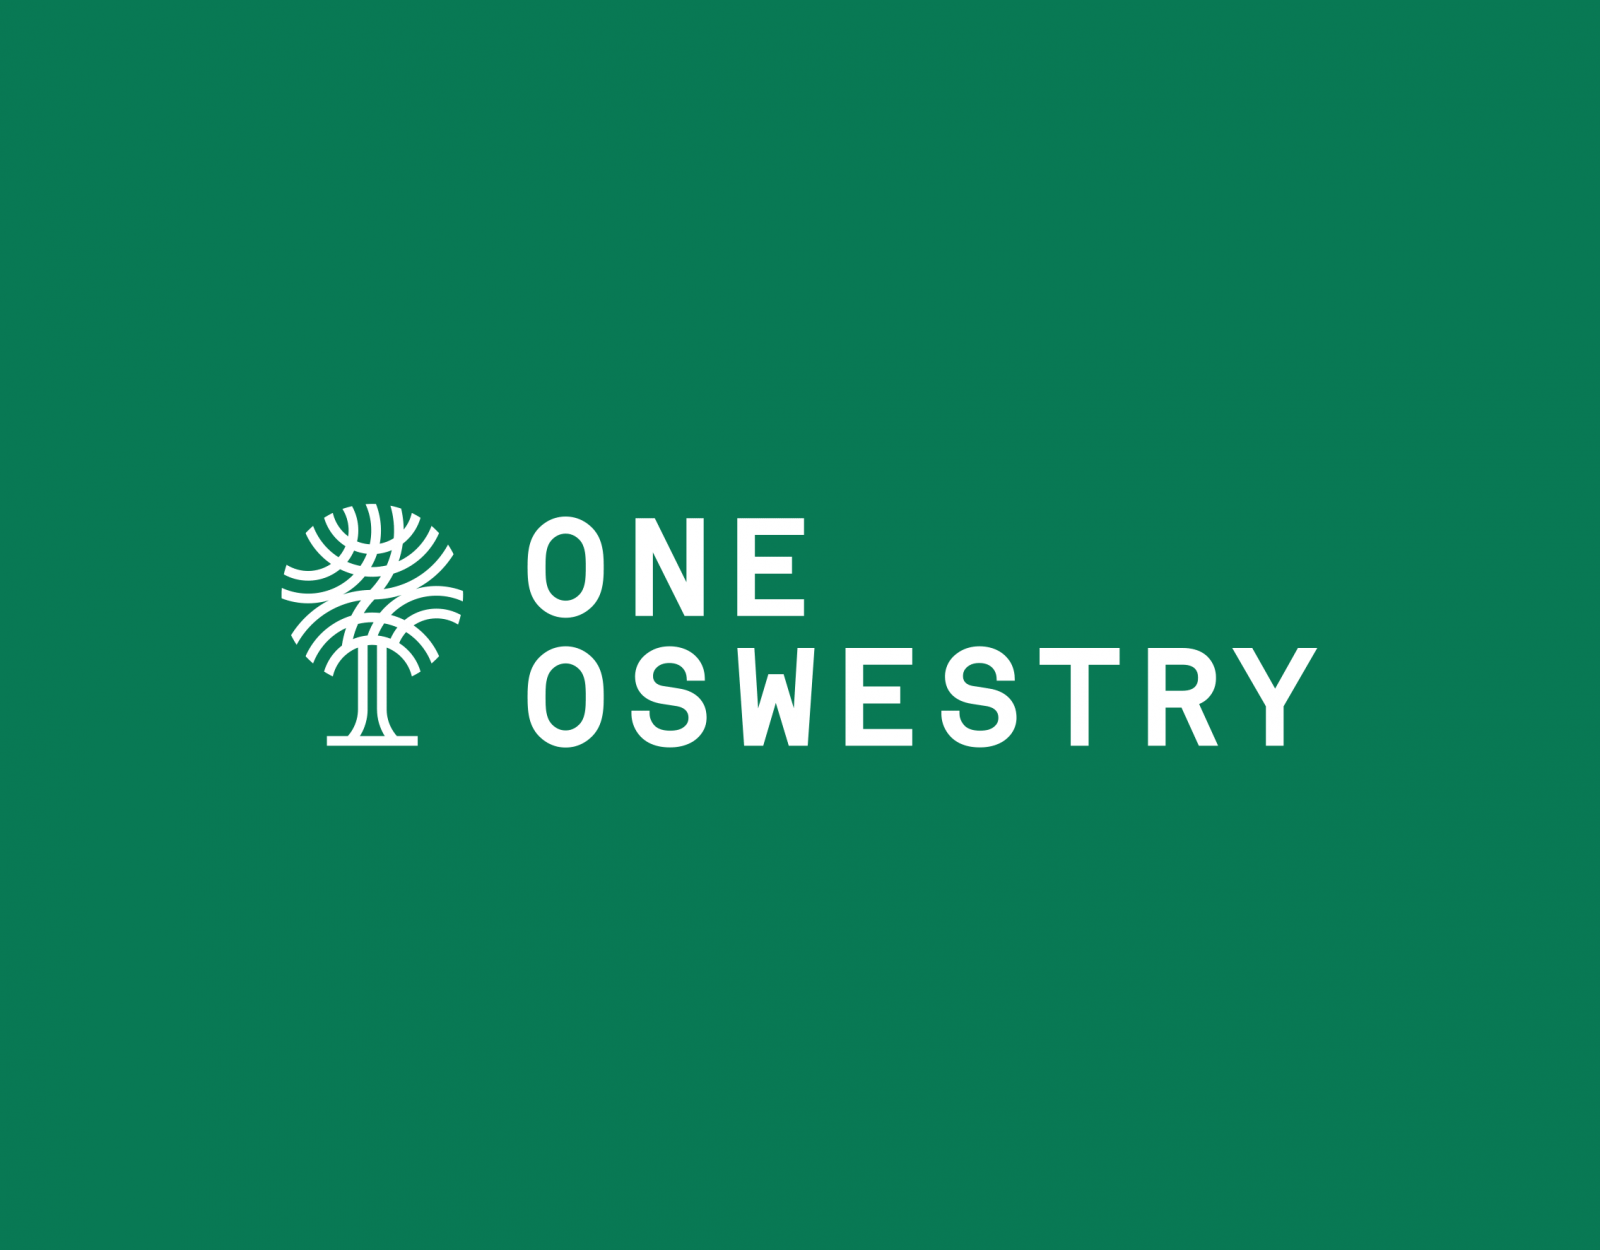 One Oswestry logo